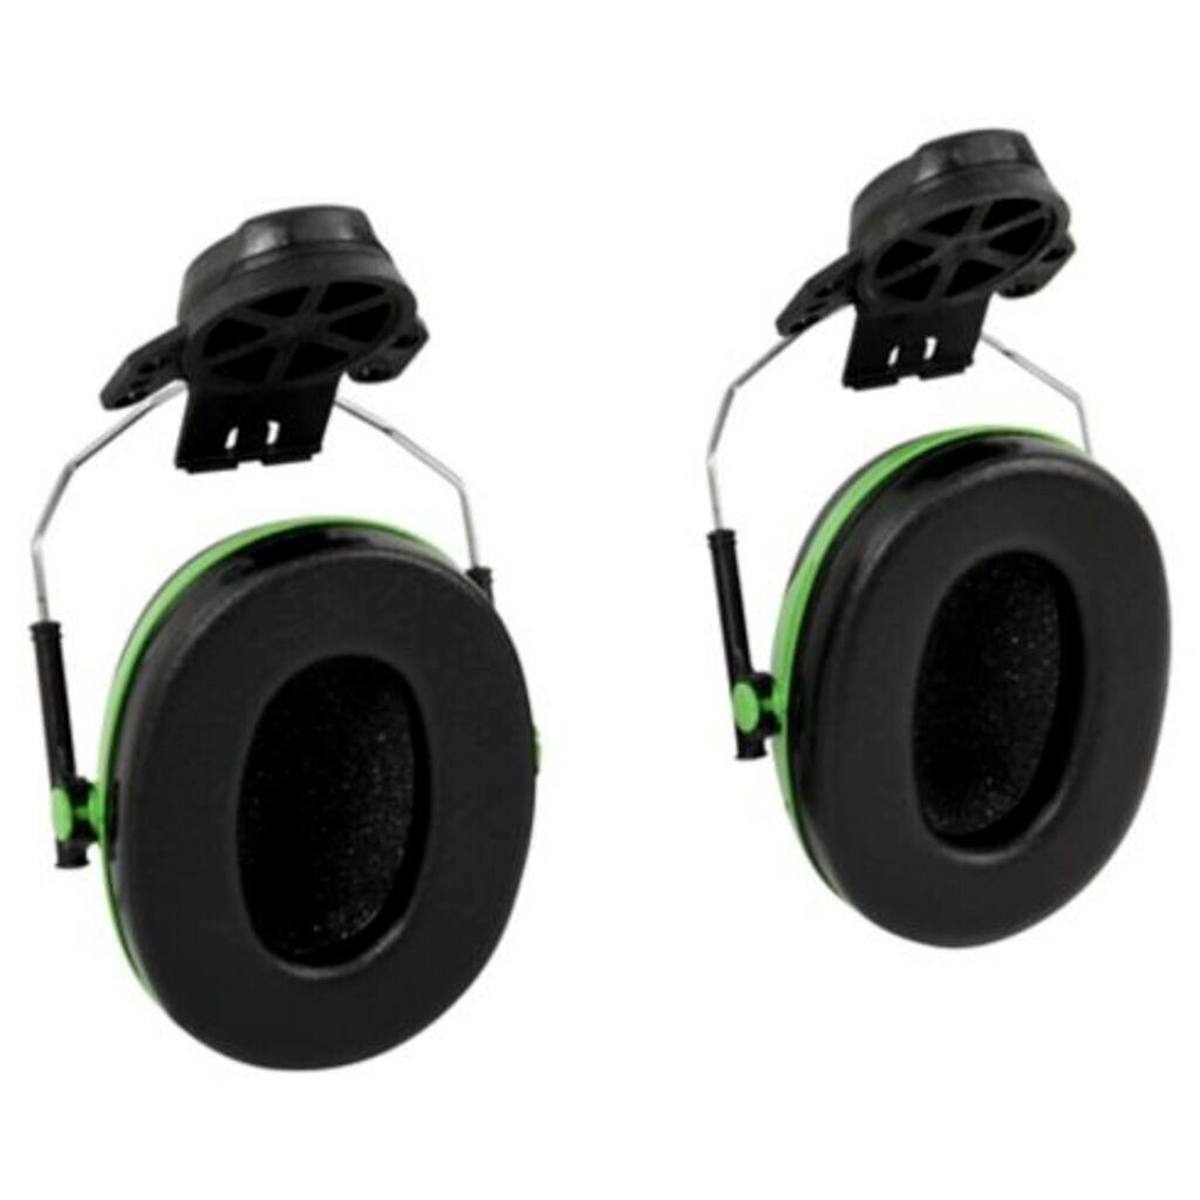 3M Peltor oorkappen, X1P3E helmbevestiging, groen, SNR = 26 dB met helmadapter P3E (voor alle 3M helmen, behalve G2000)